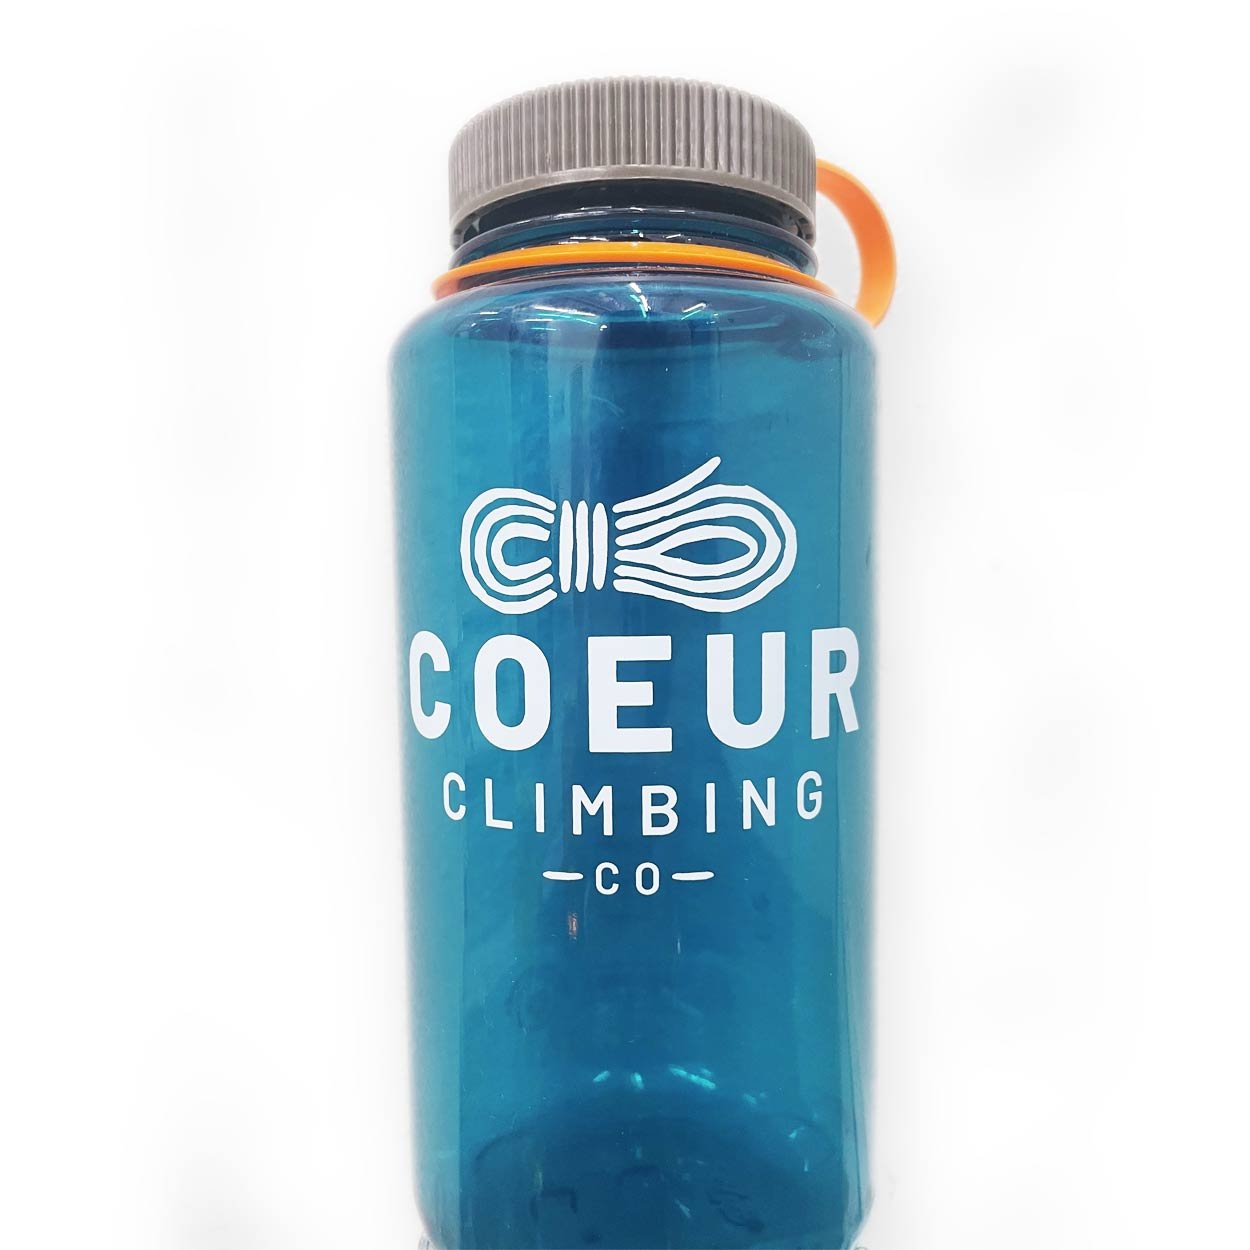 trout-green-32oz-nalgene-water-bottle-with-coeur-climbing-logo.jpg